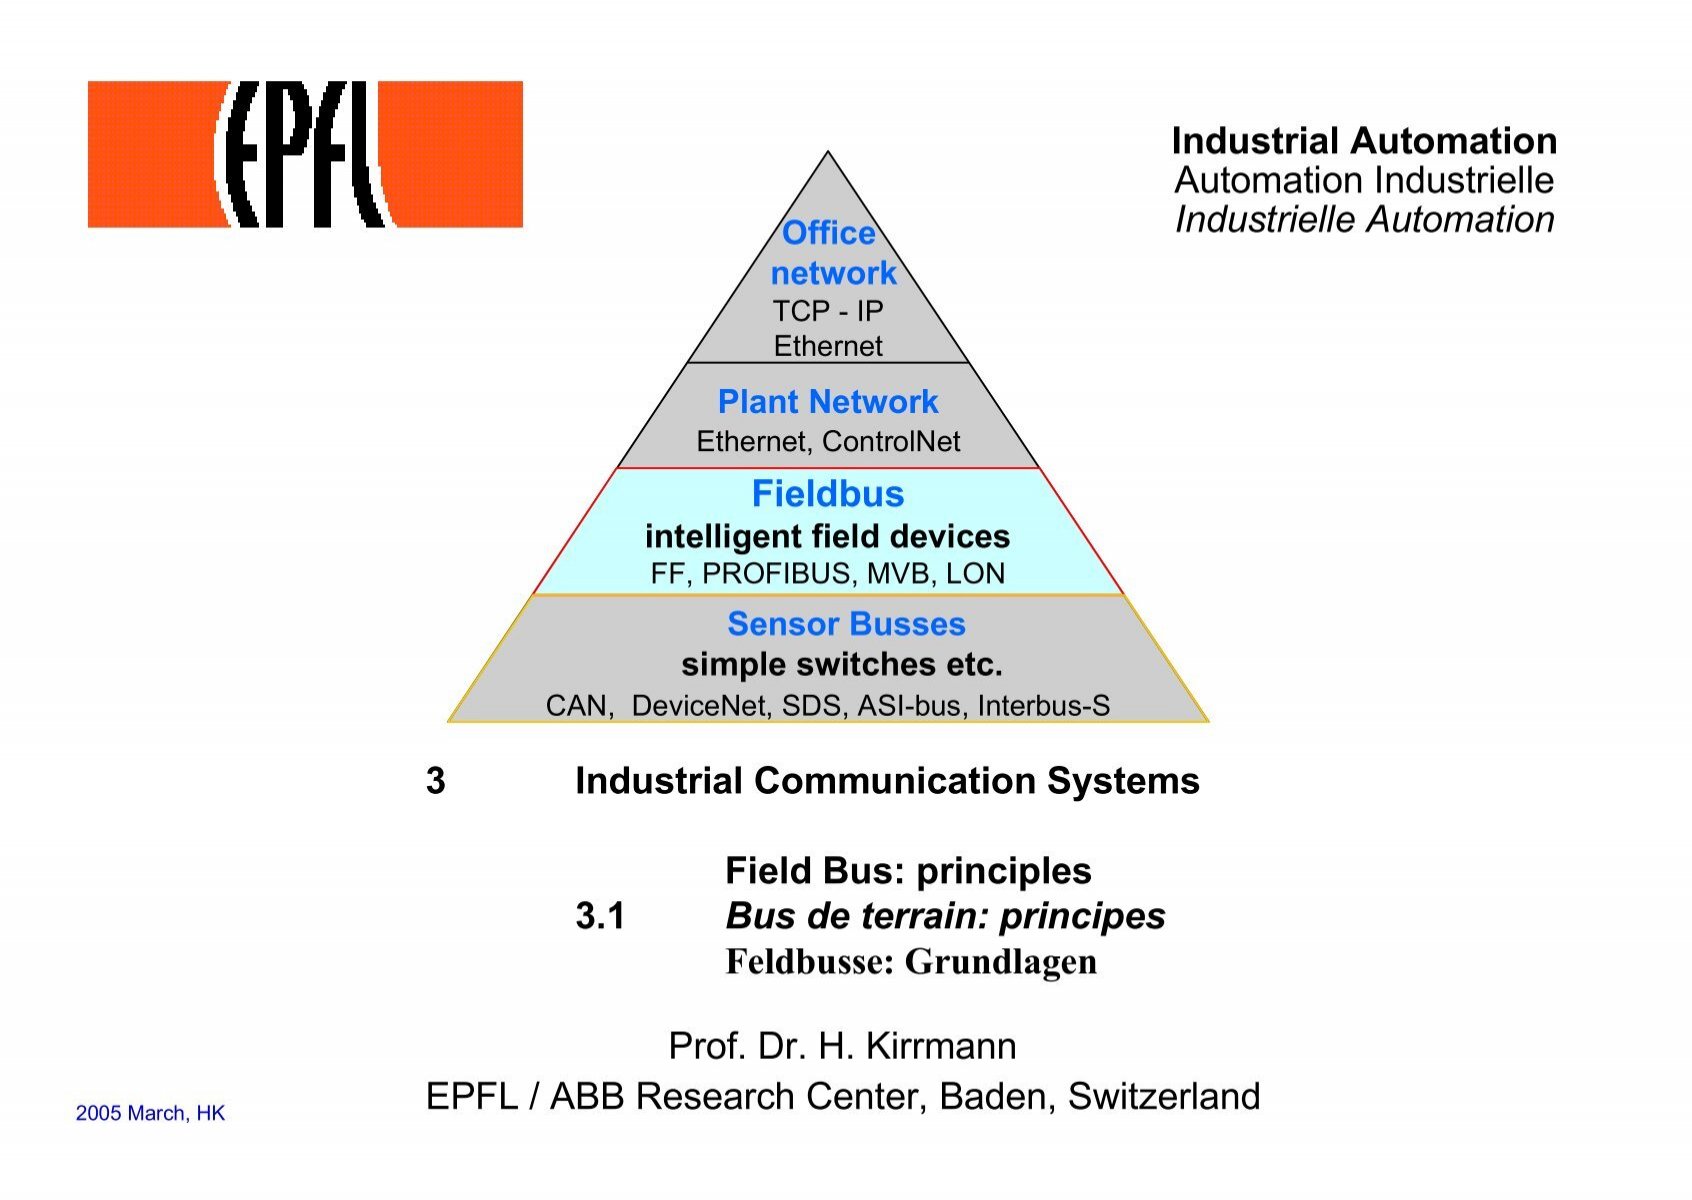 Industrial Automation Automation Industrielle Industrielle